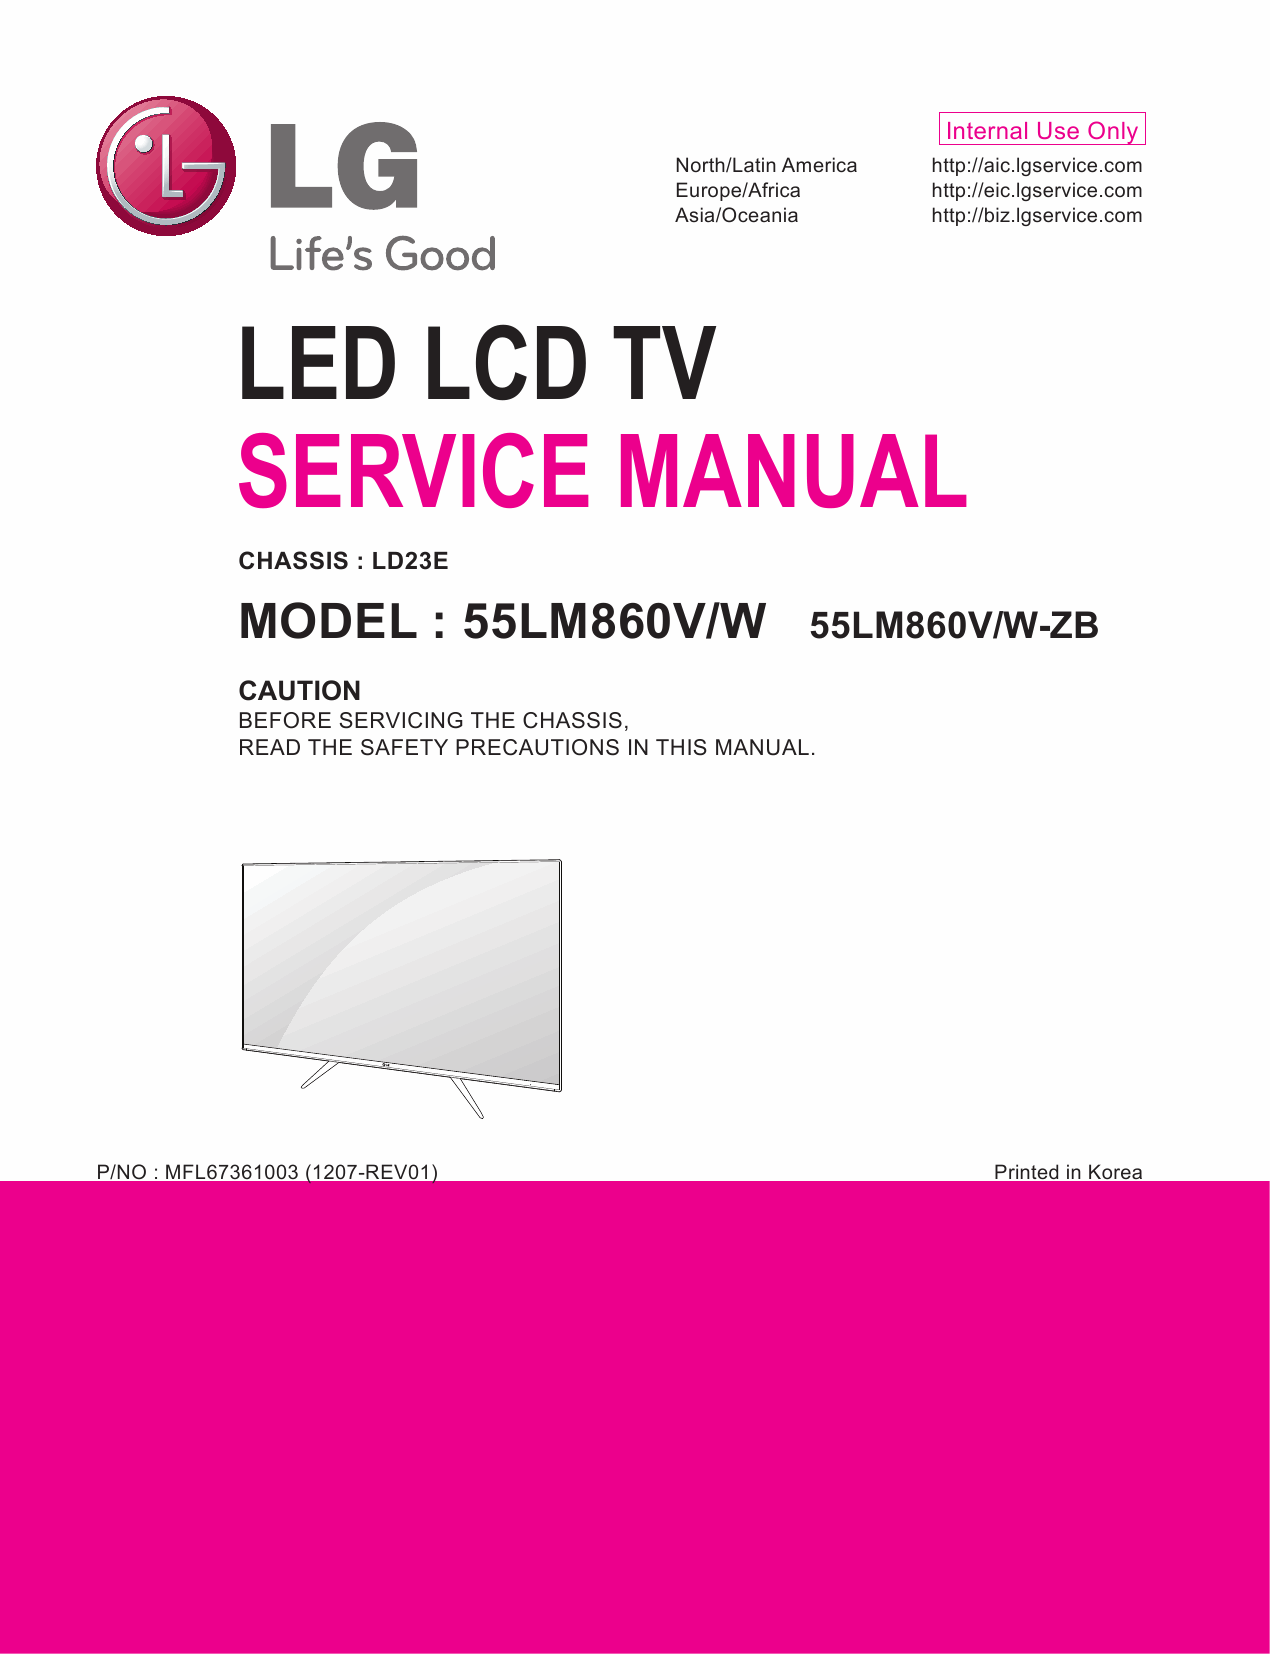 LG_LCD_TV_55LM860V_860W_Service_Manual_2012_Qmanual.com-1